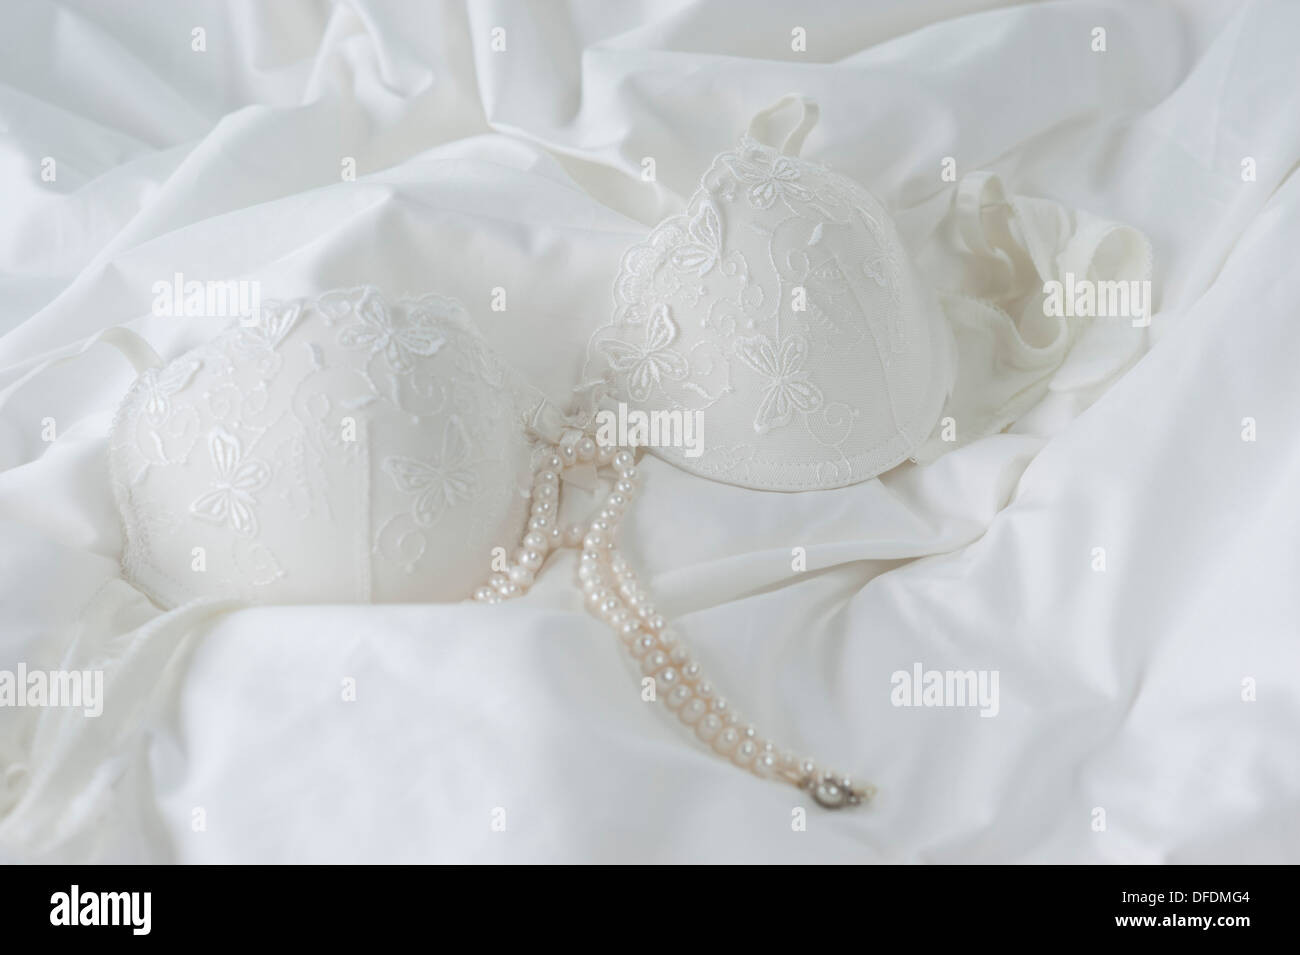 Black bra on bed sheet Stock Photo - Alamy